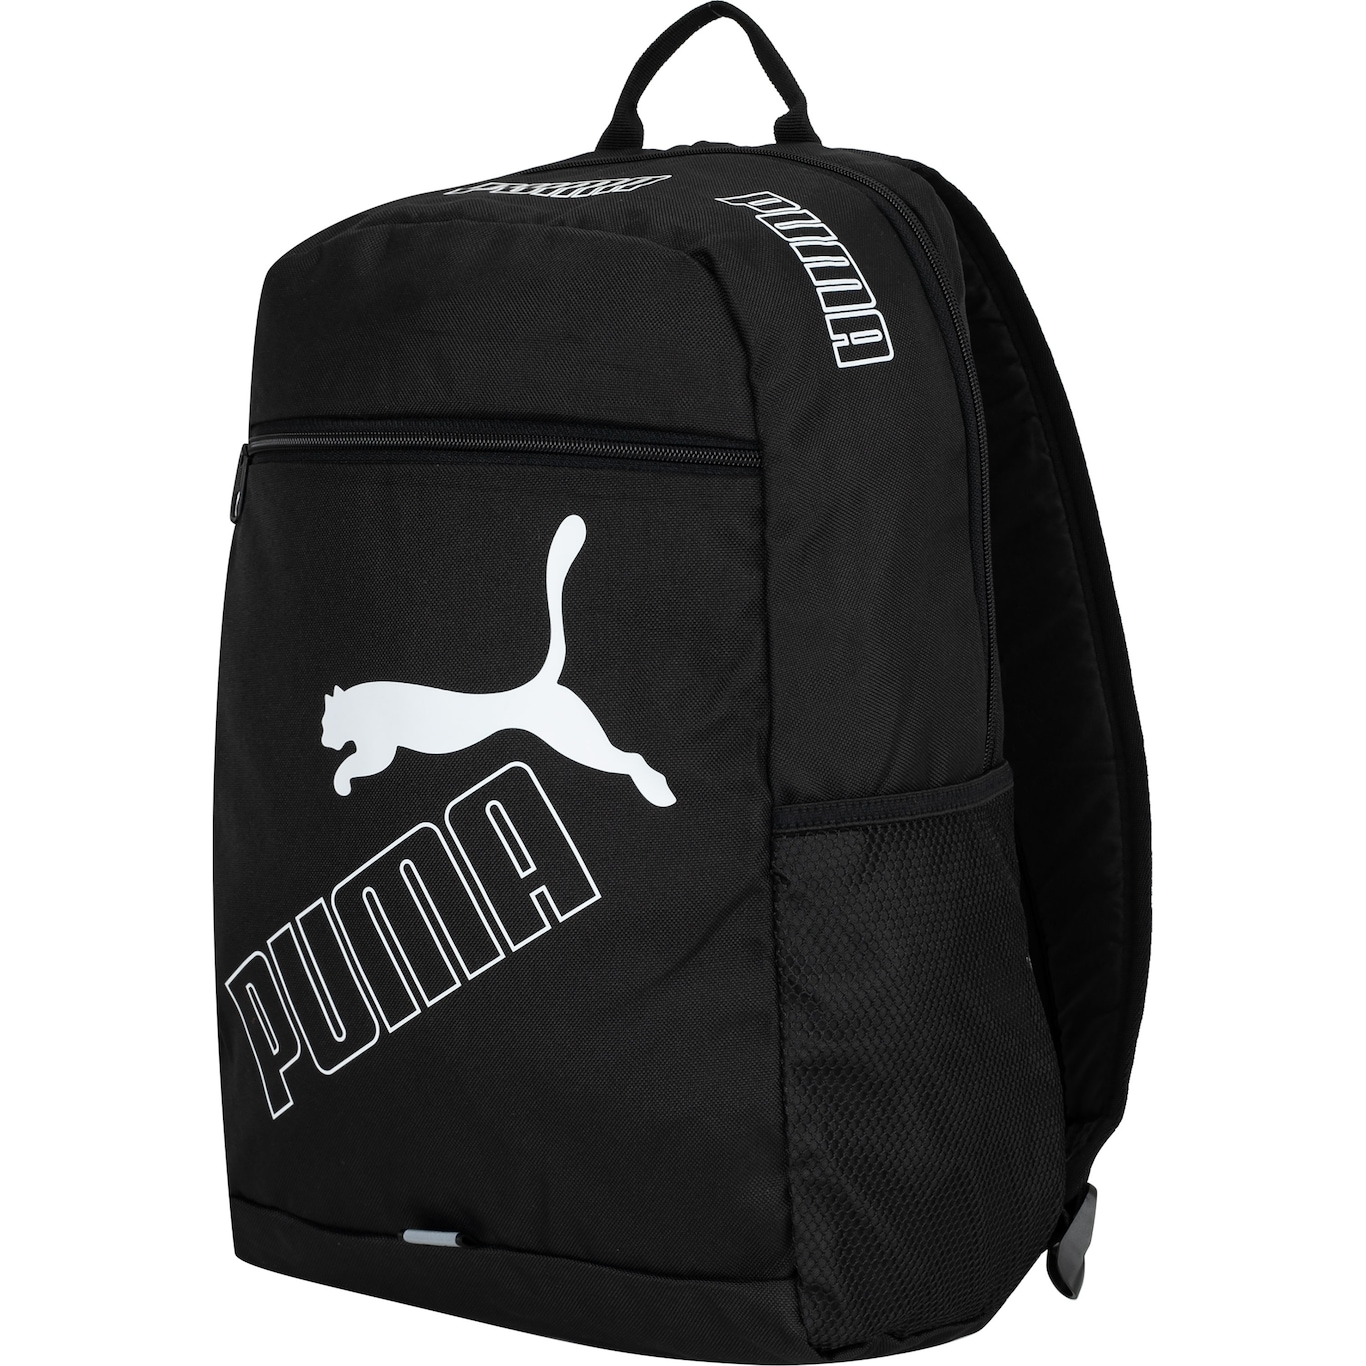 Mochila Puma Phase Backpack II - 21 Litros - Foto 4